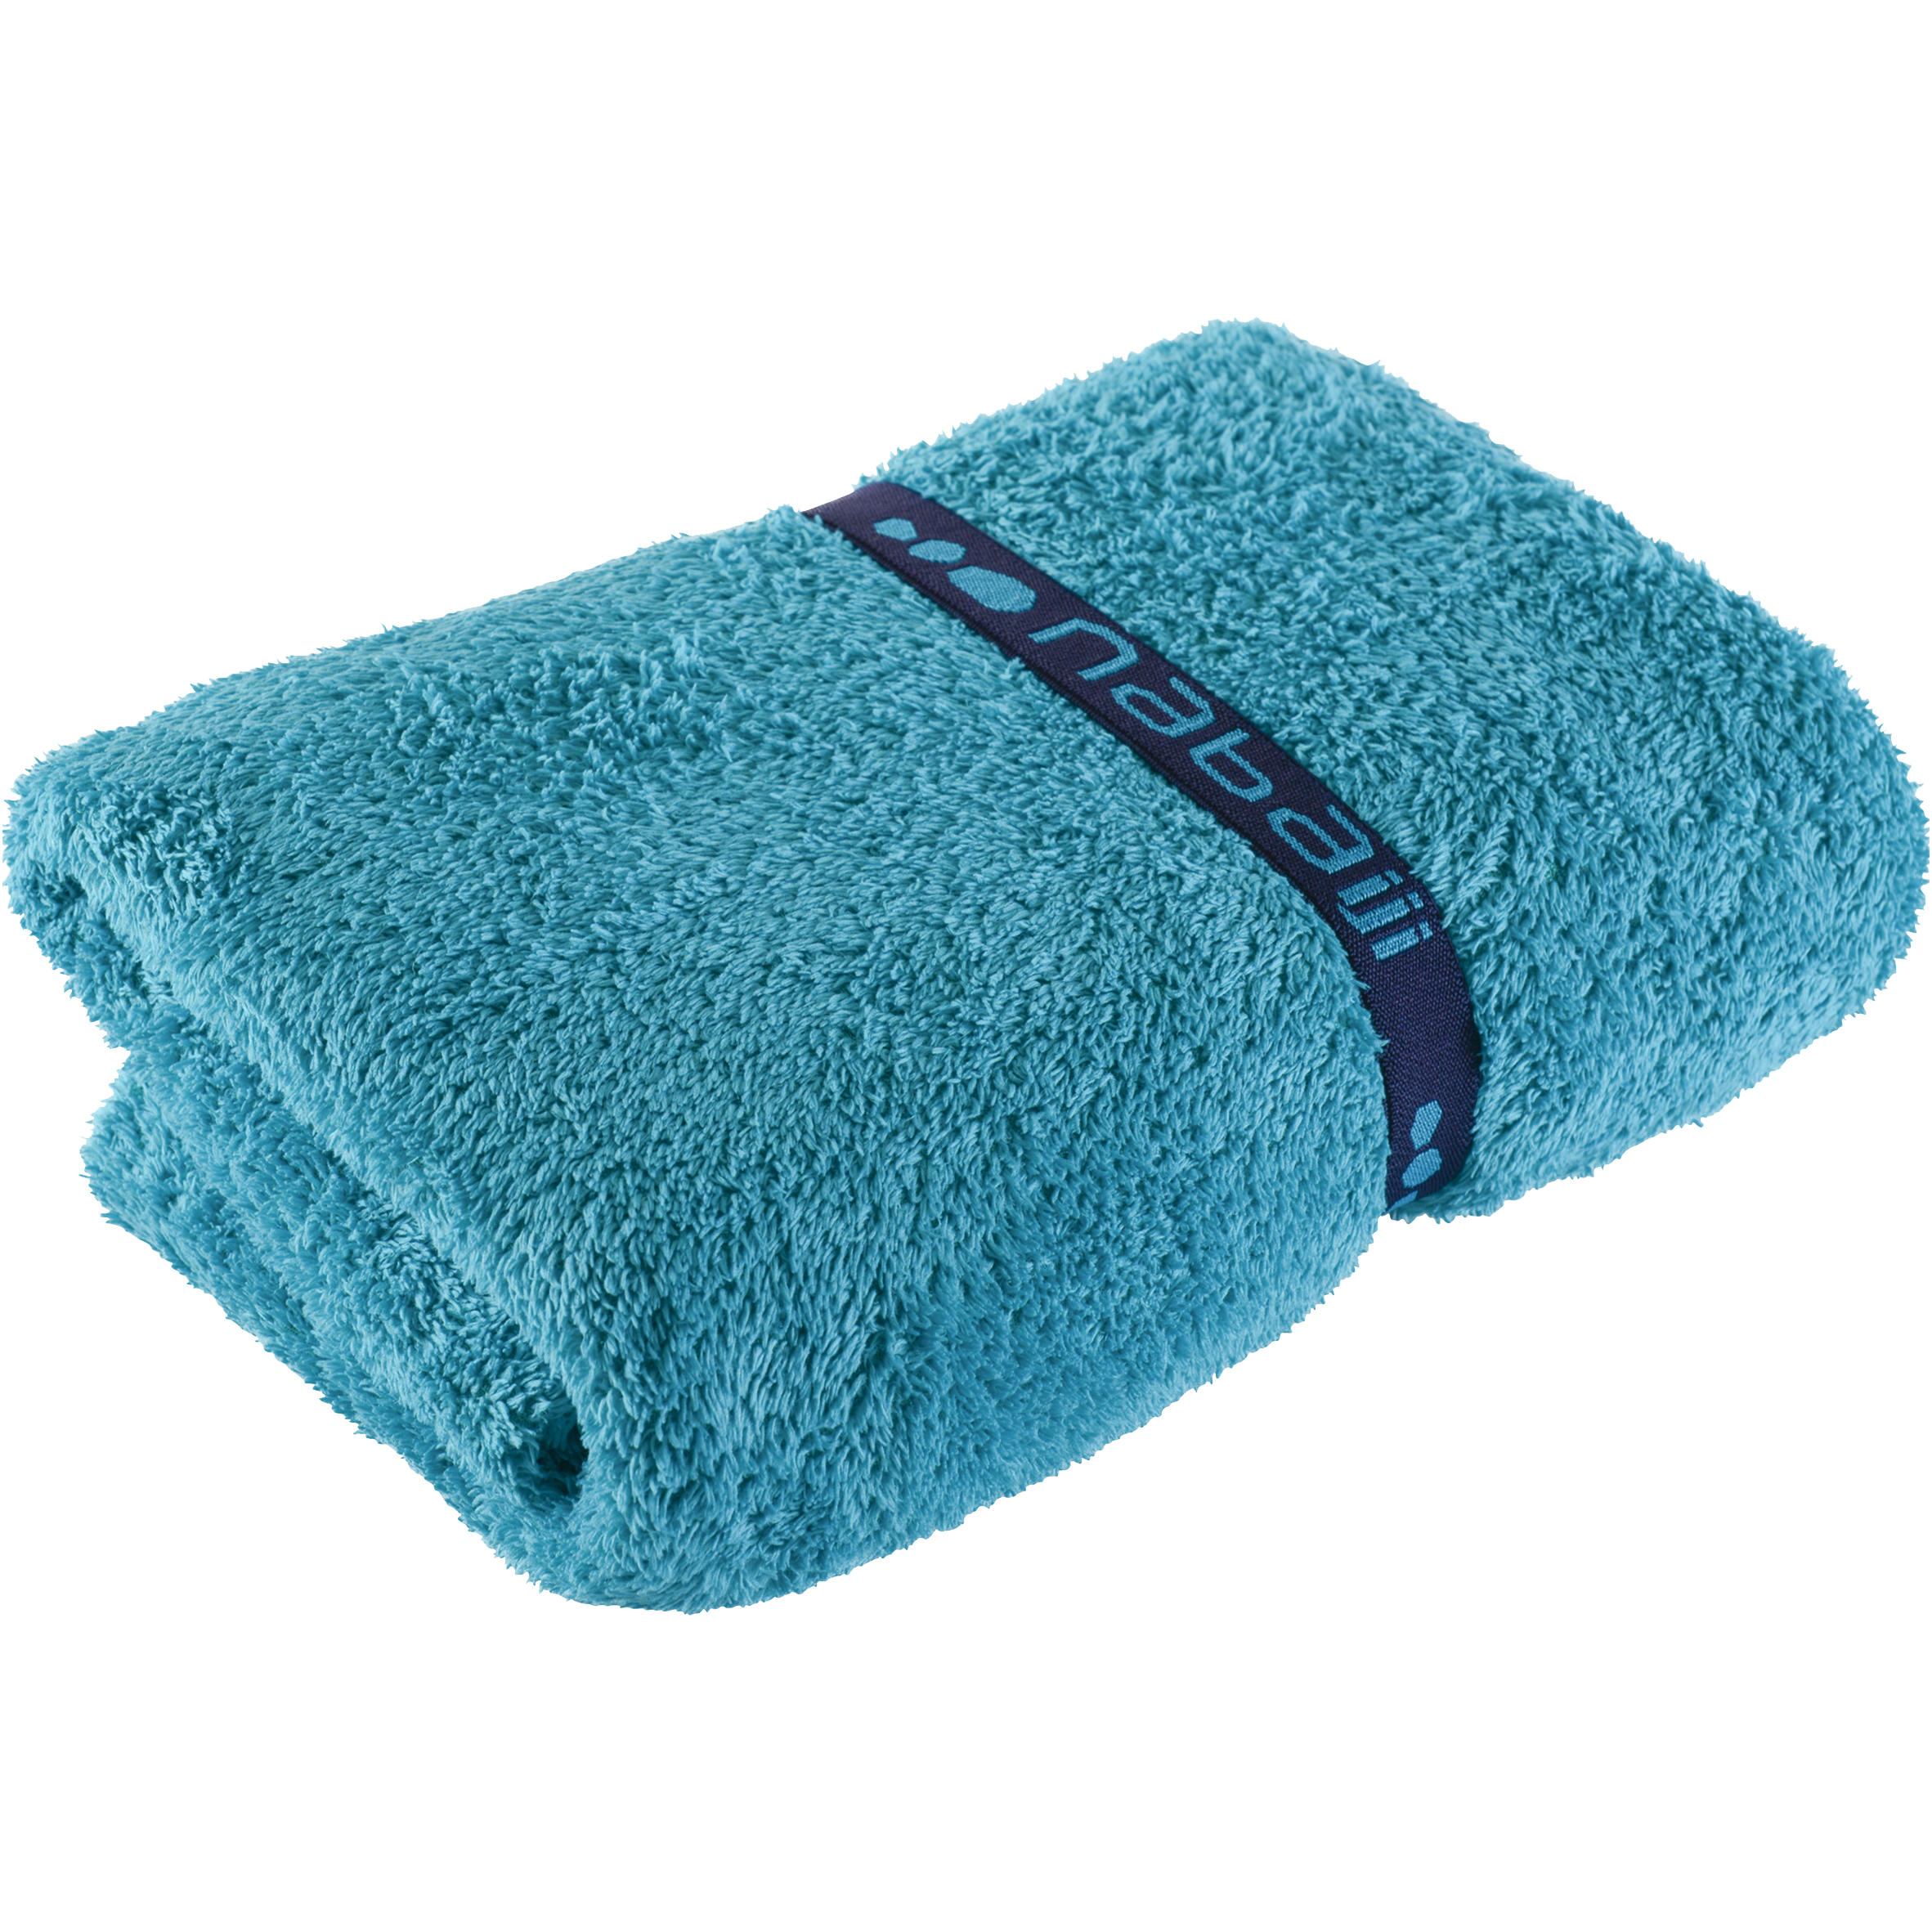 decathlon towel price